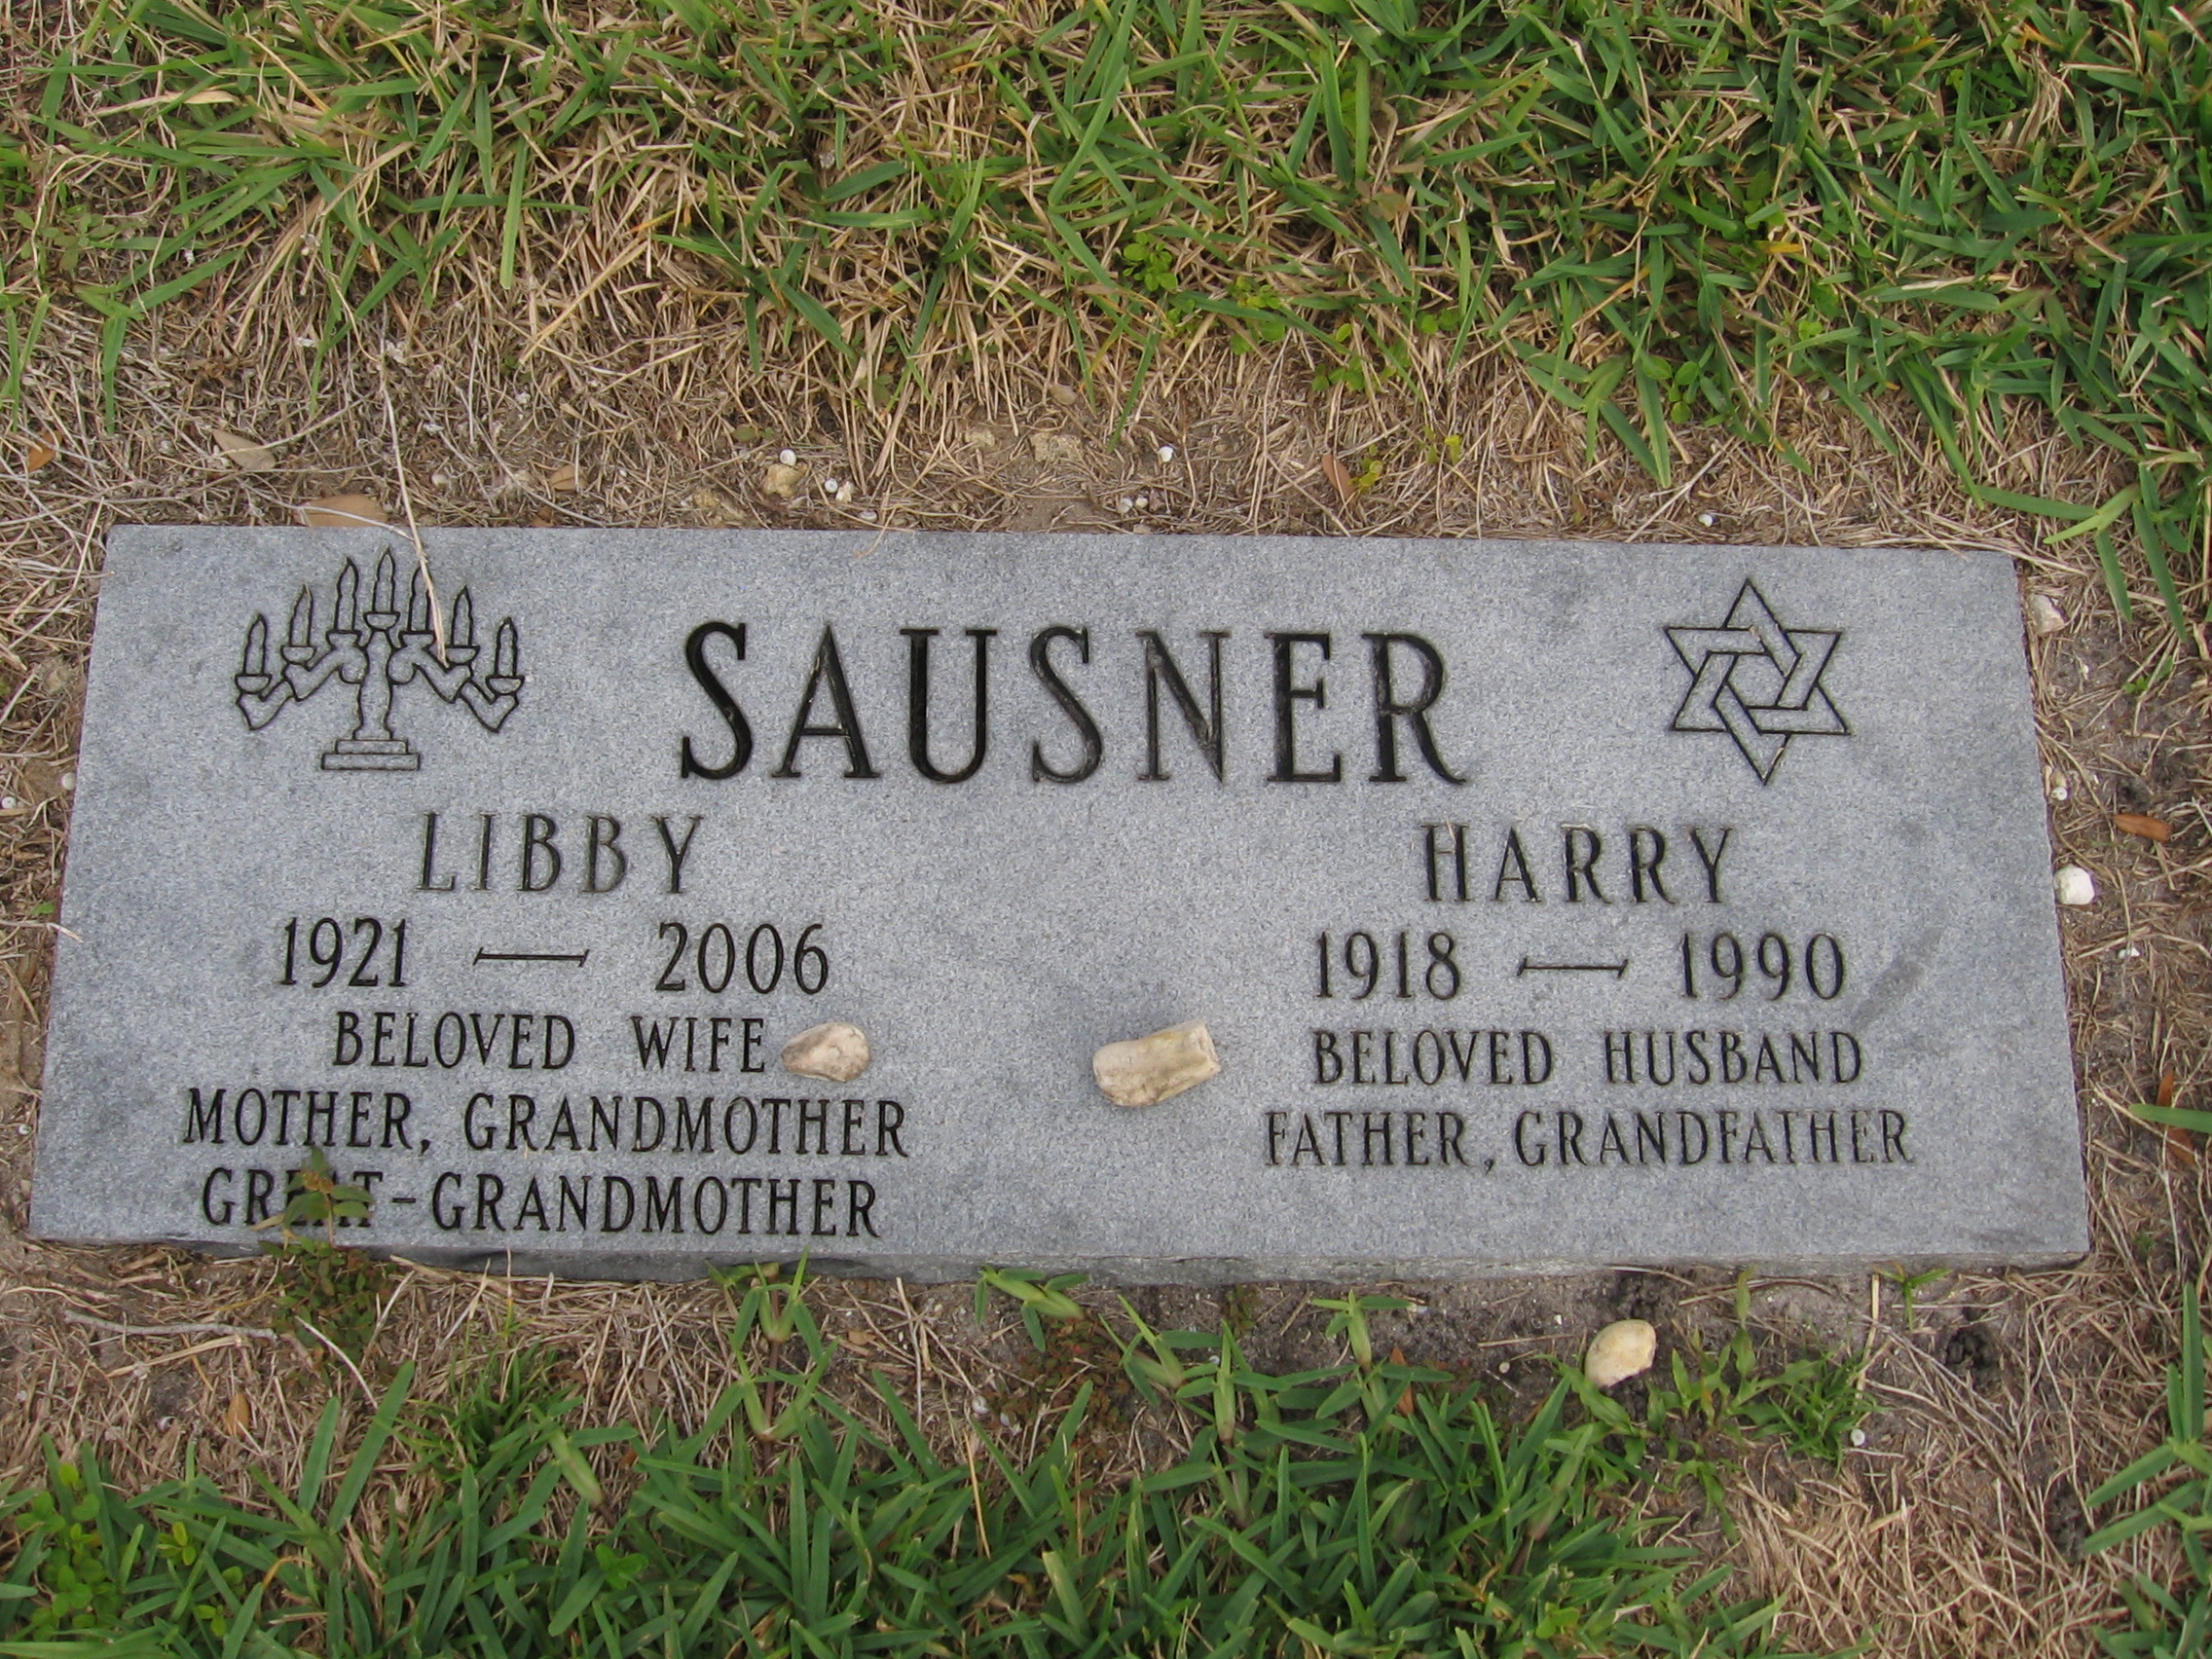 Harry Sausner